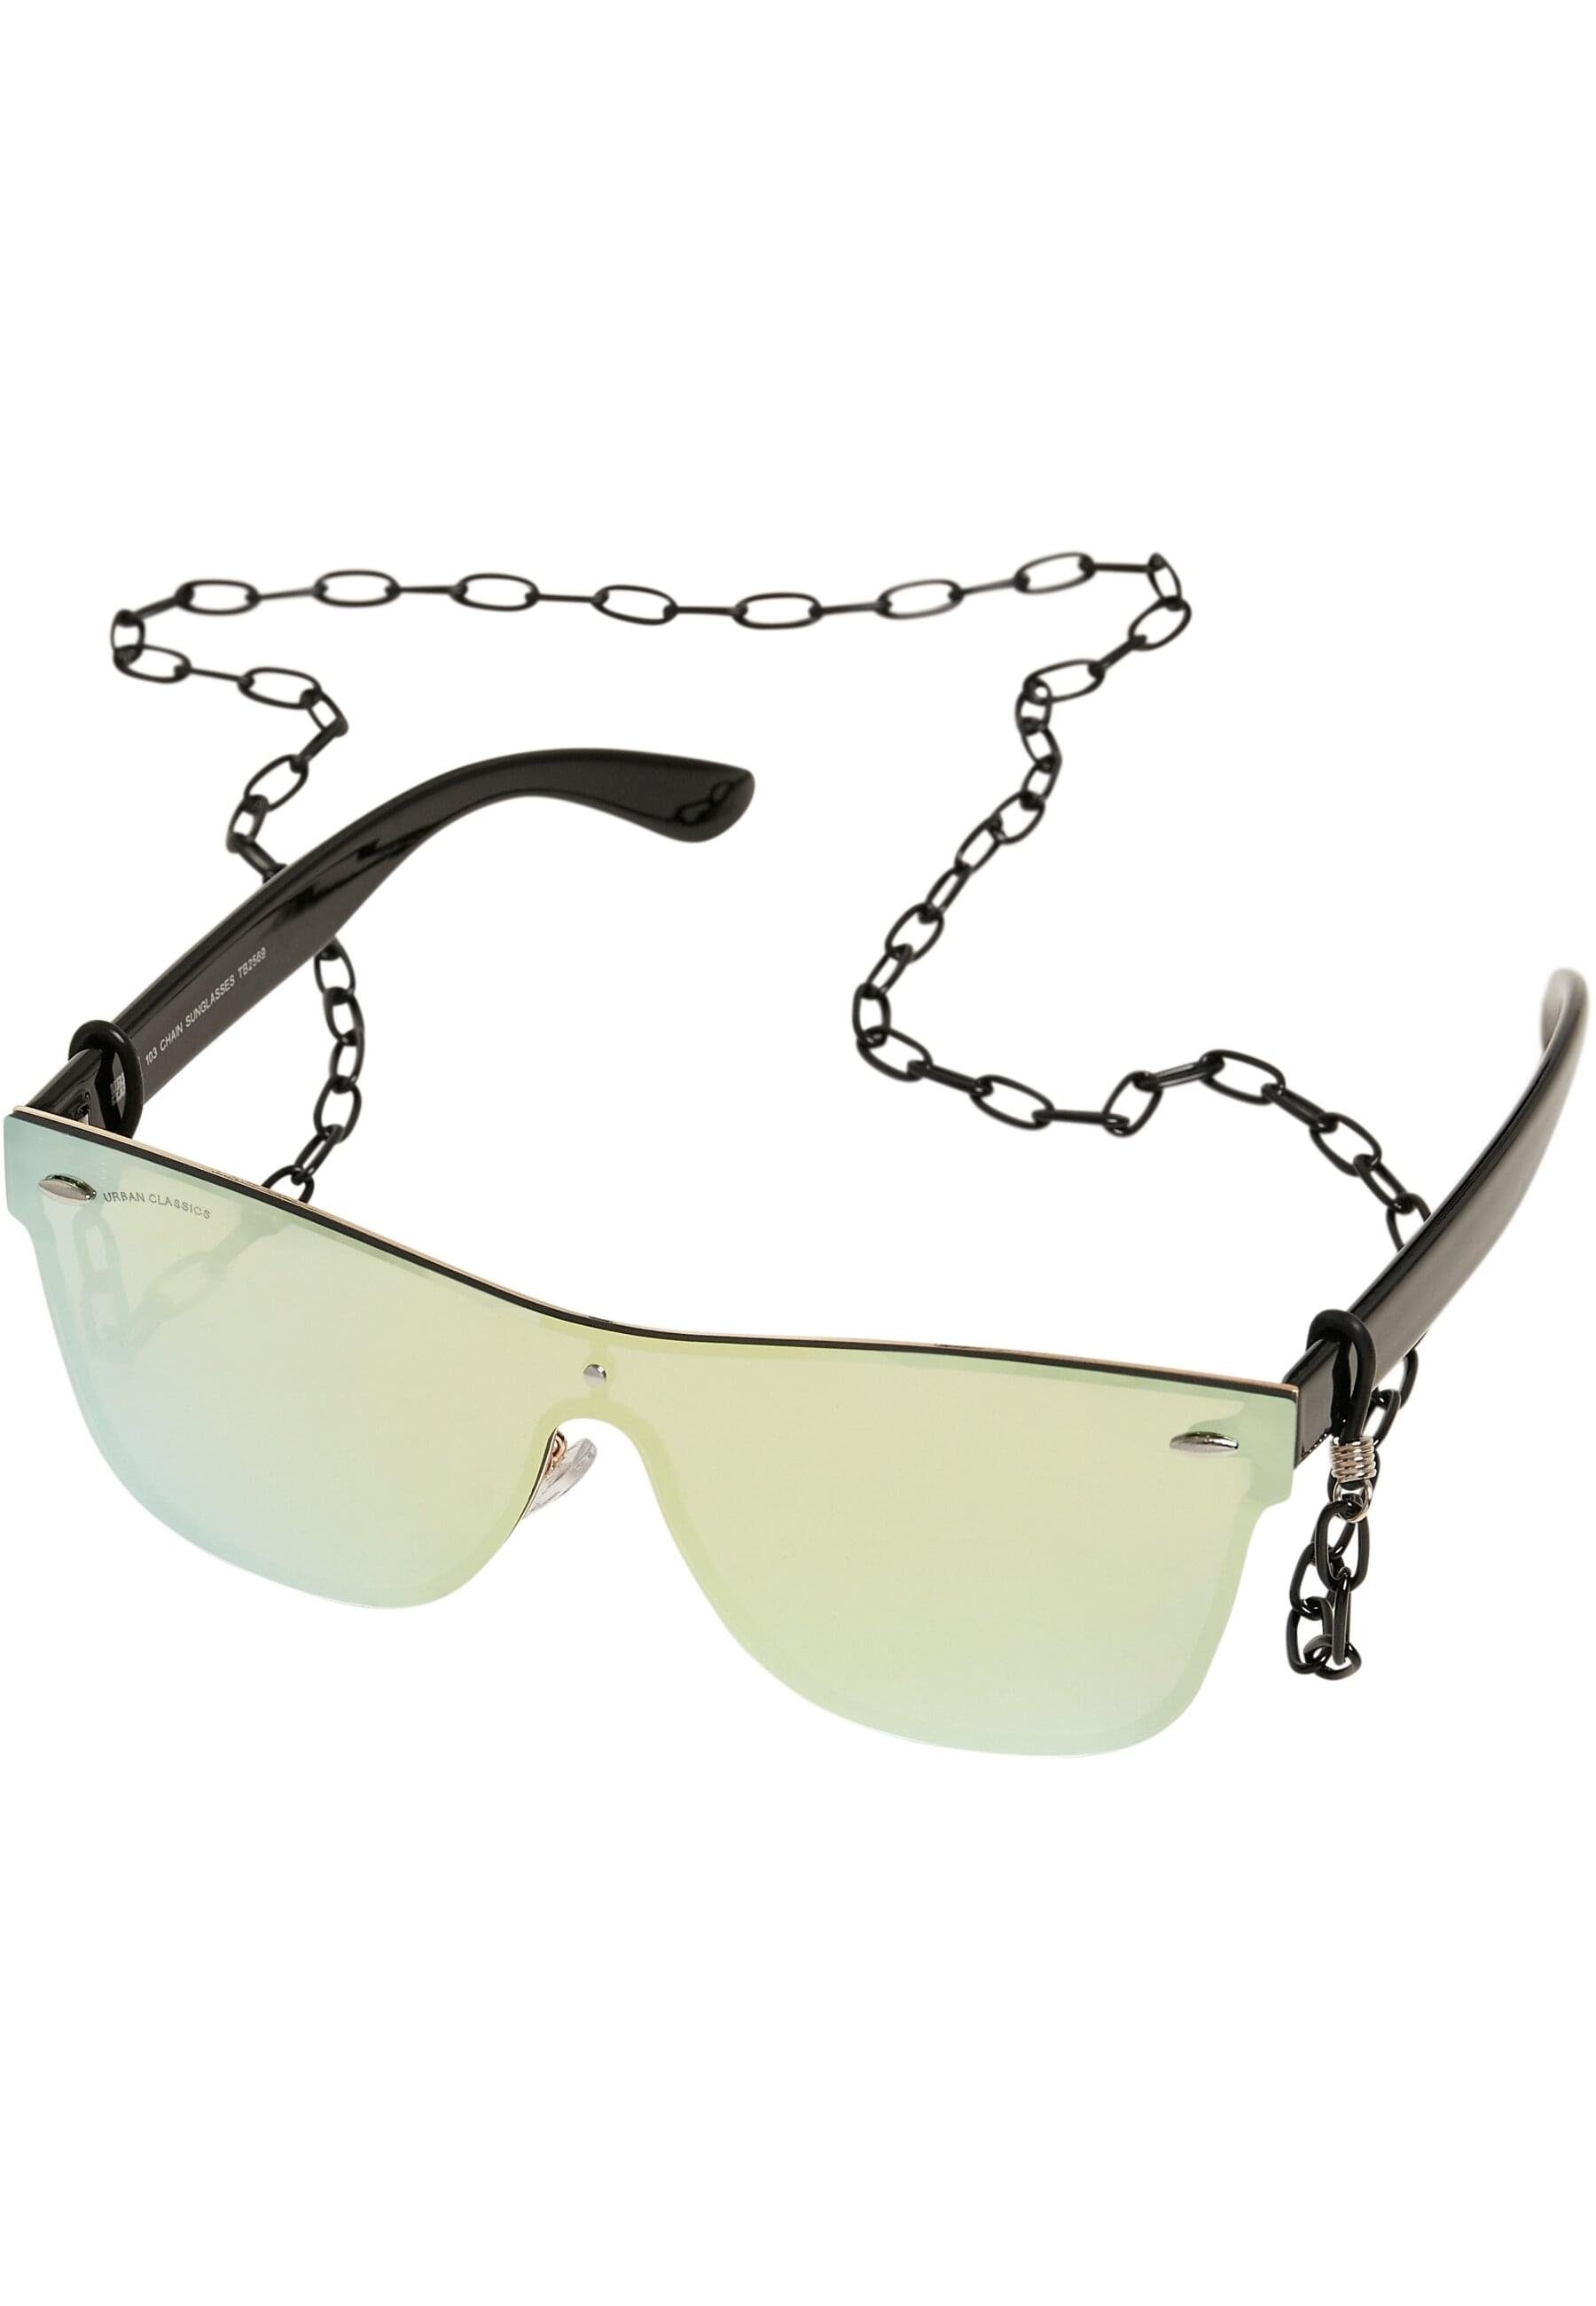 URBAN CLASSICS 103 black/gold Sonnenbrille Chain mirror Sunglasses Unisex